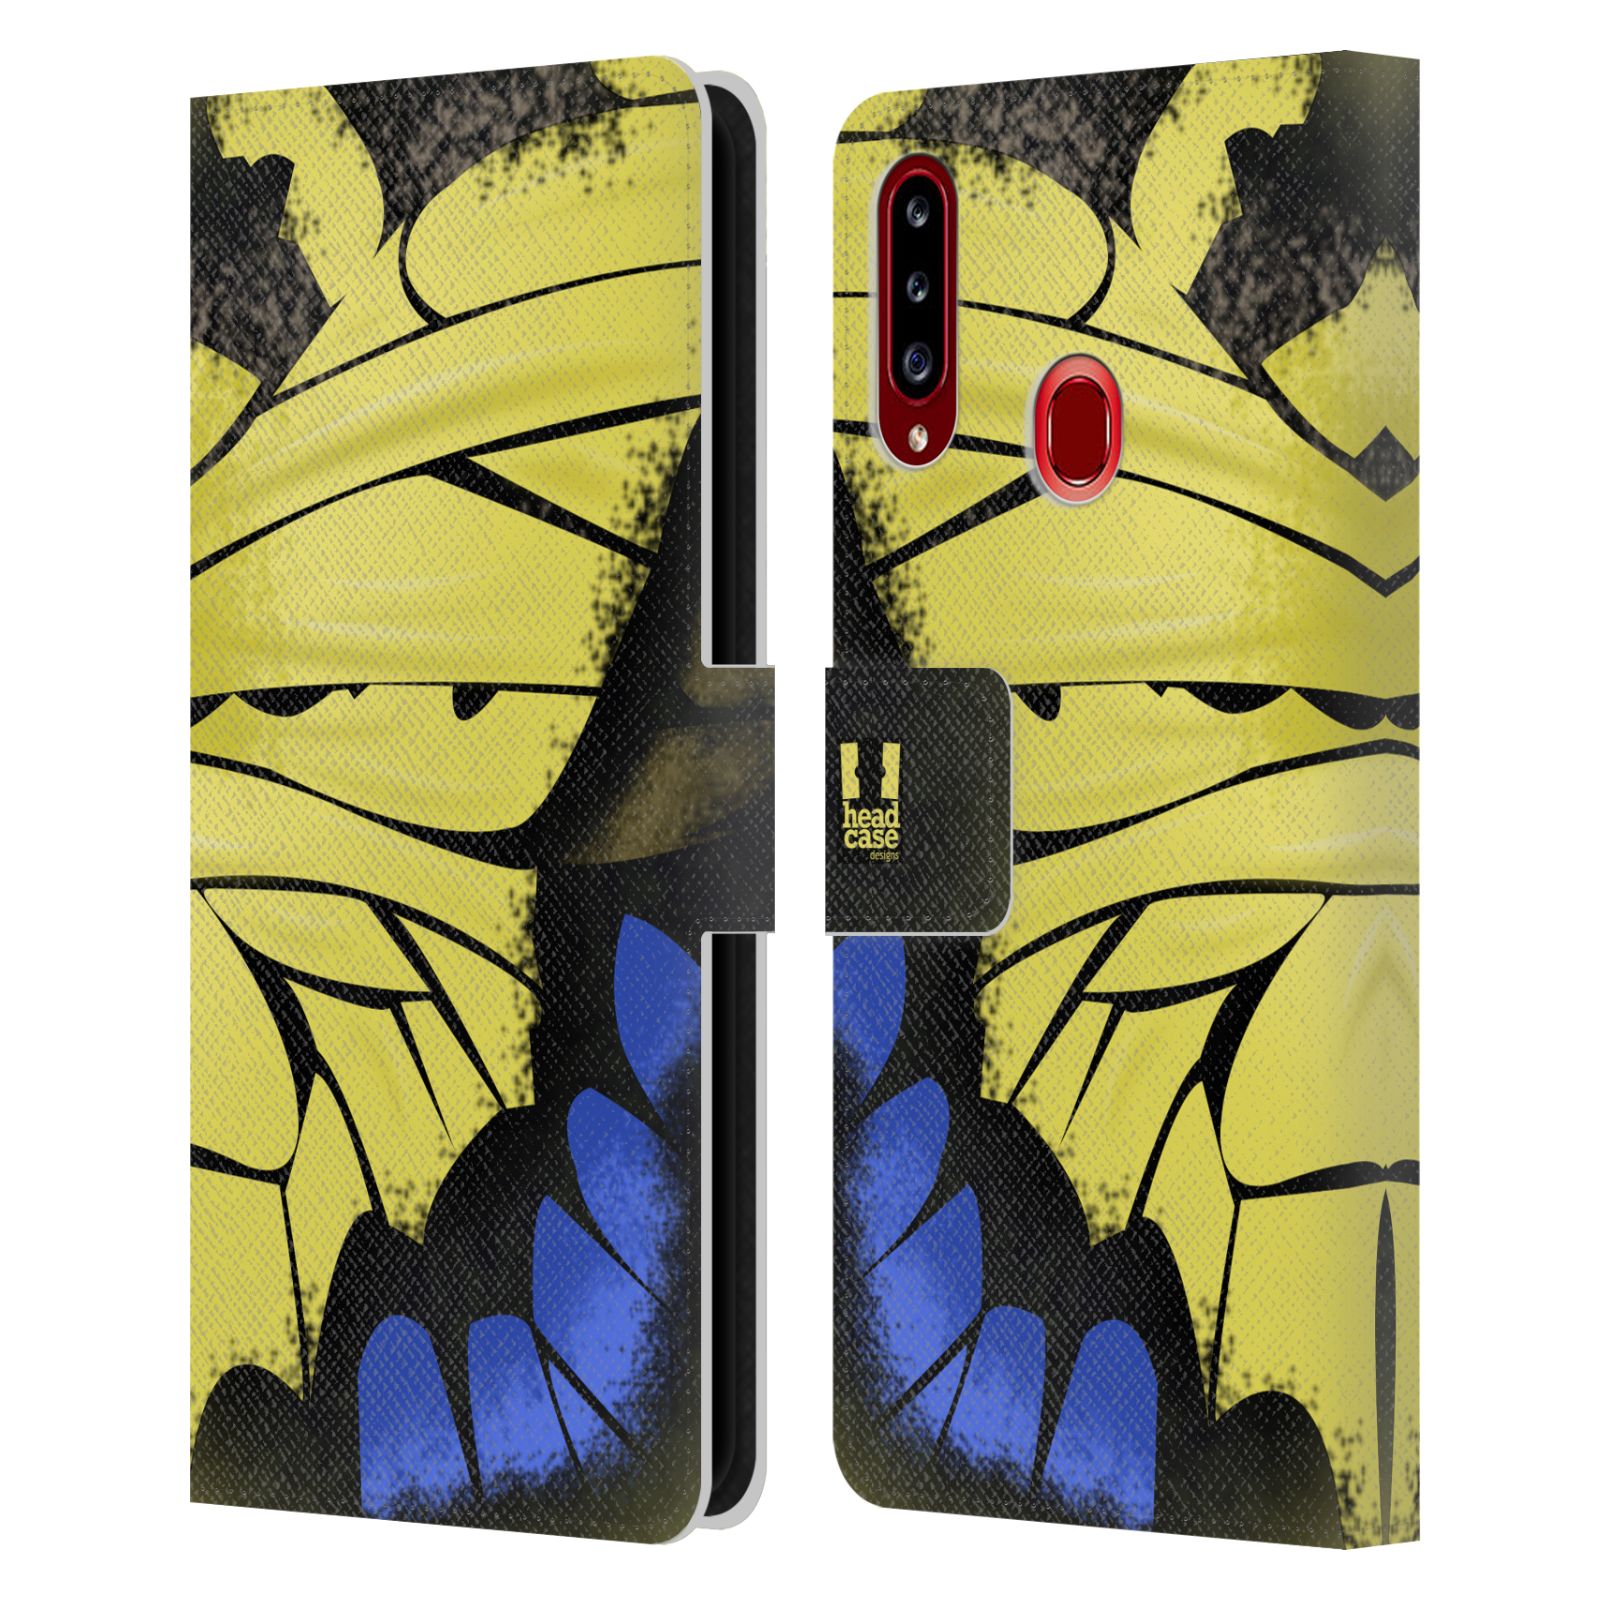 HEAD CASE Flipové pouzdro pro mobil Samsung Galaxy A20s motýl a křídla kreslený vzor žlutá a modrá